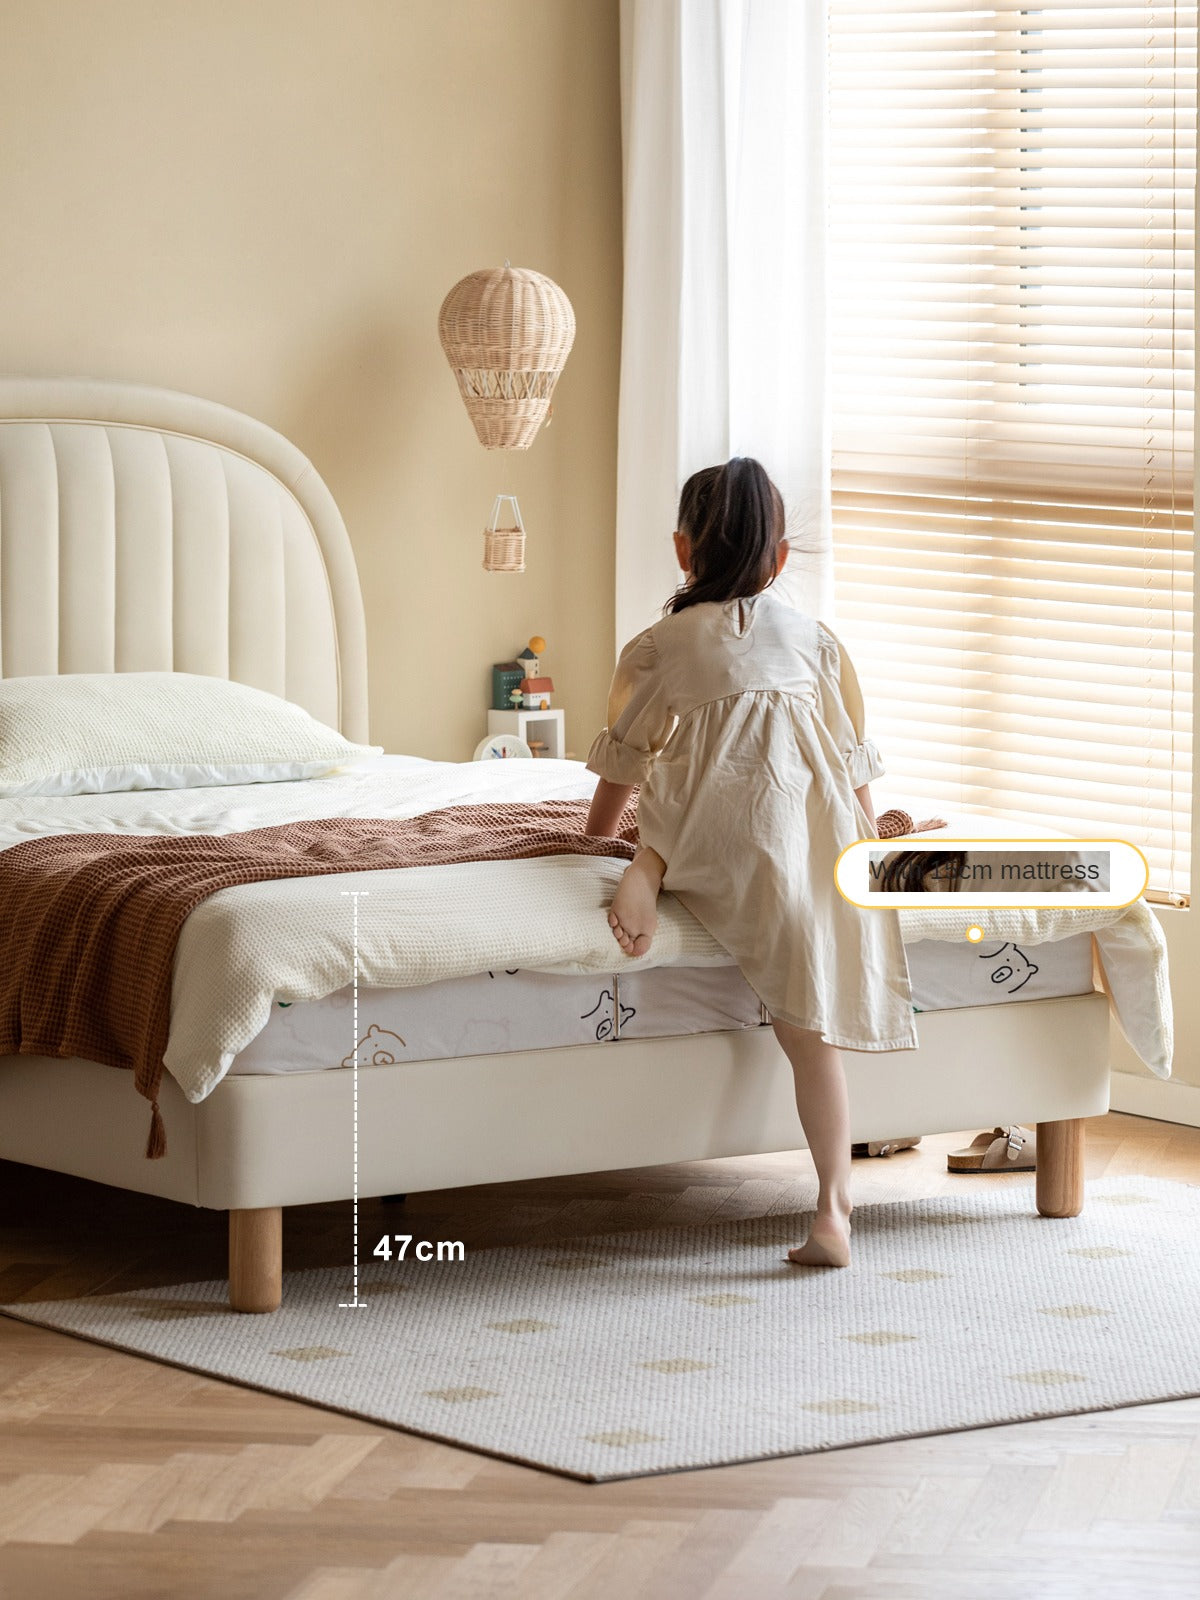 Children's Bed Modern Simple White Cream organic leather")